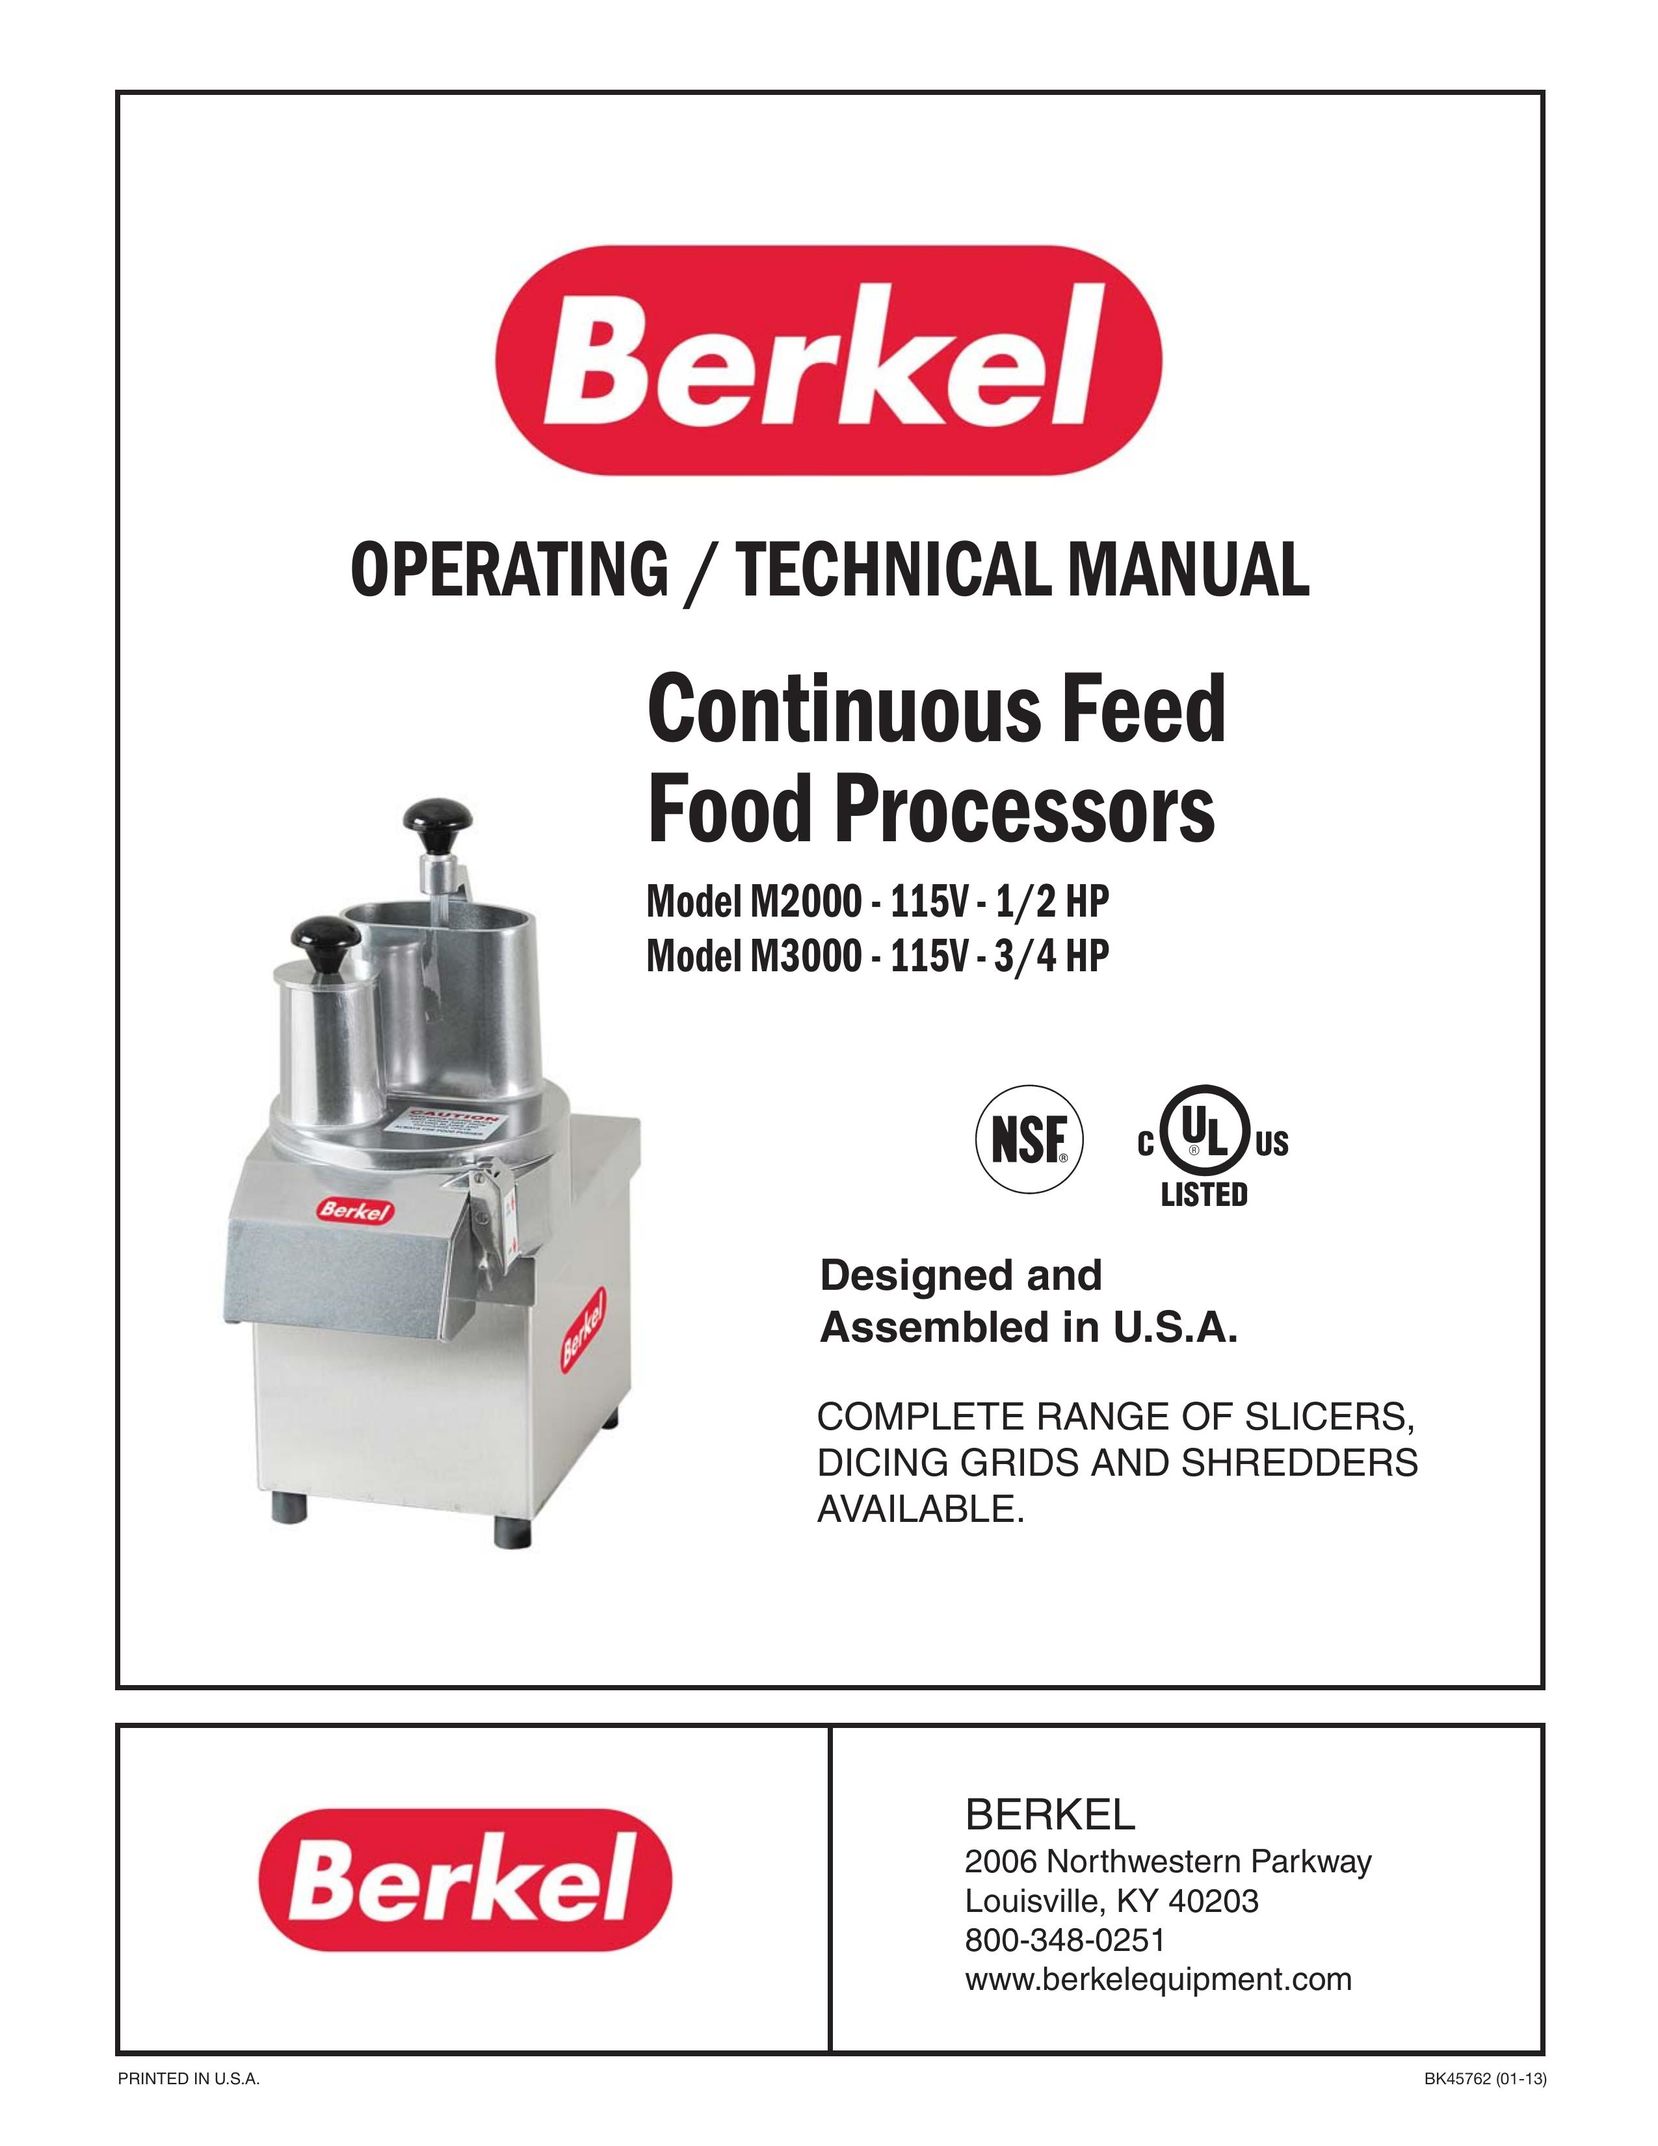 Berkel Model M3000 - 115V - 3/4 HP Food Processor User Manual